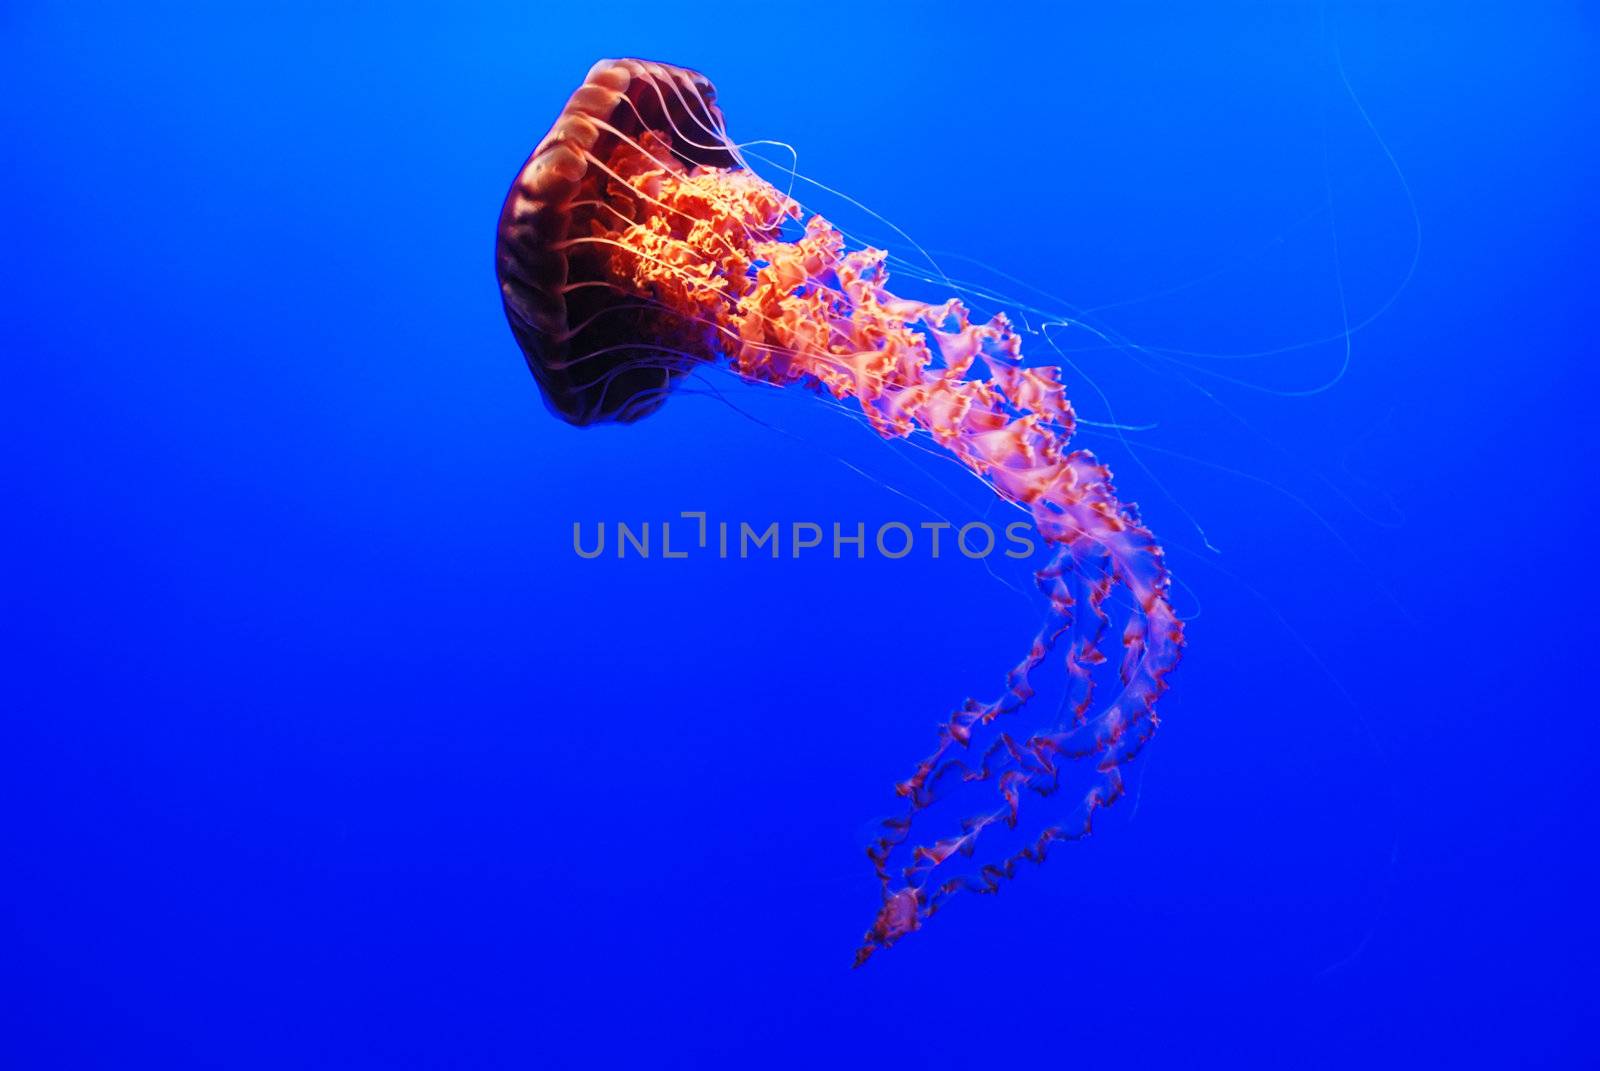 A sea nettle jellyfish - Chrysaora fuscescens on blue background